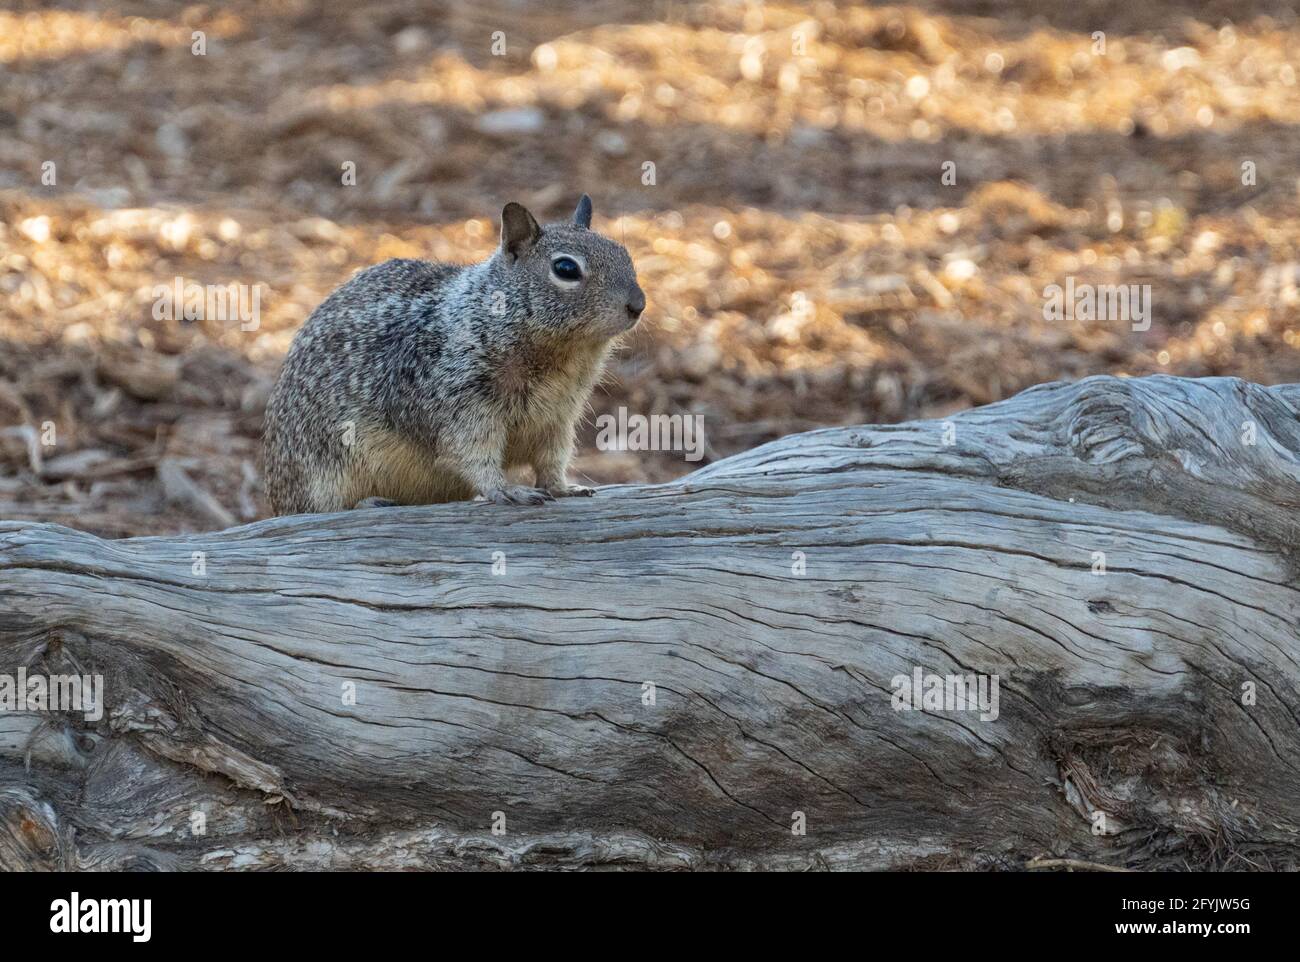 A ground squirrel perches on a tree trunk in Santa Monica, California, USA Stock Photo